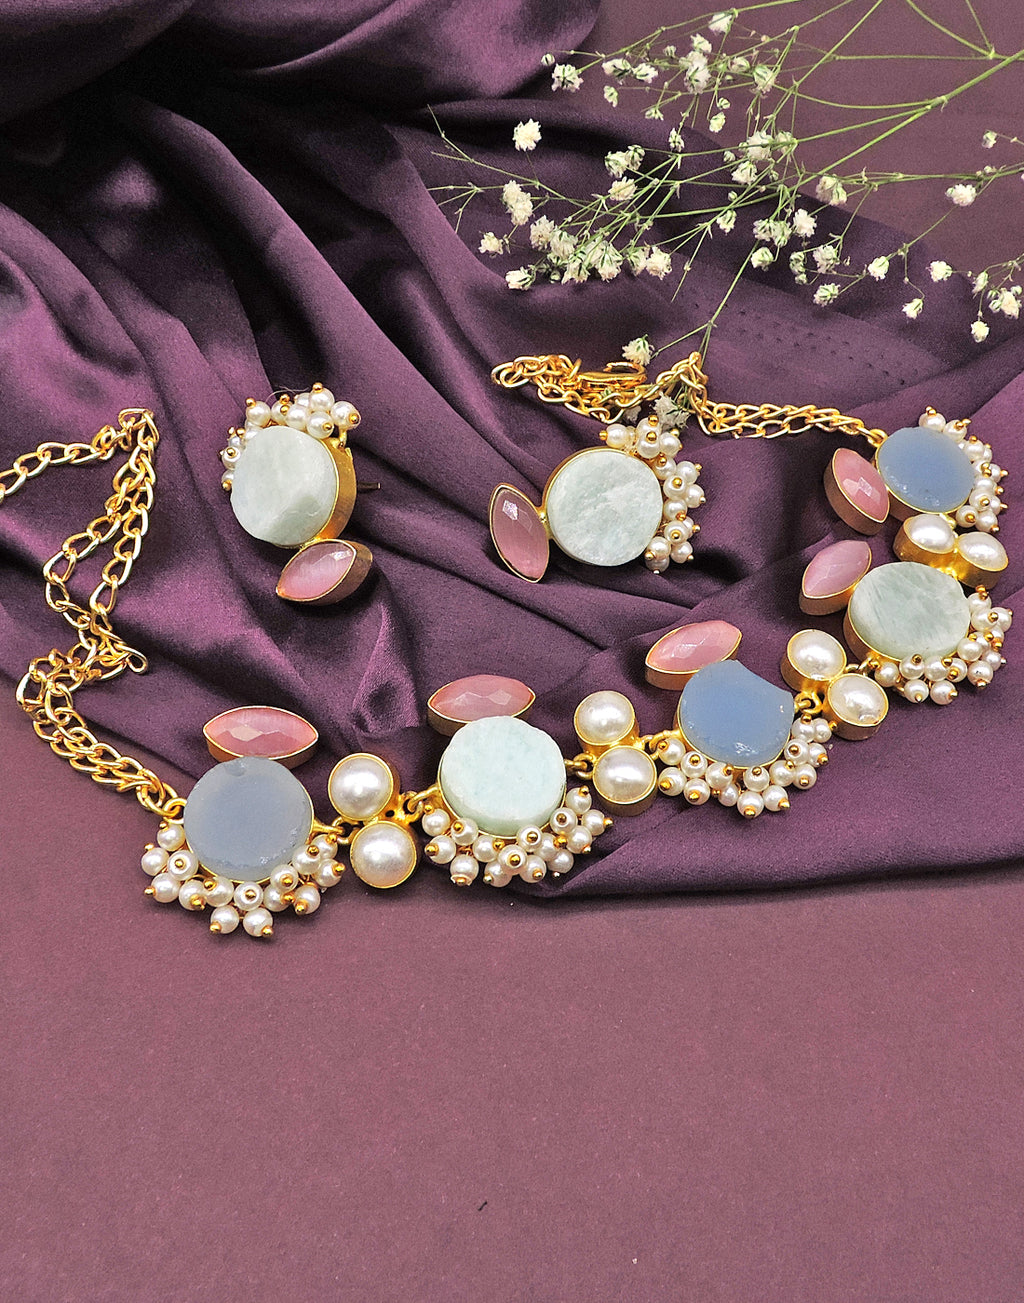 Jewelled Pearl Earrings - Statement Earrings - Gold-Plated & Hypoallergenic Jewellery - Made in India - Dubai Jewellery - Dori